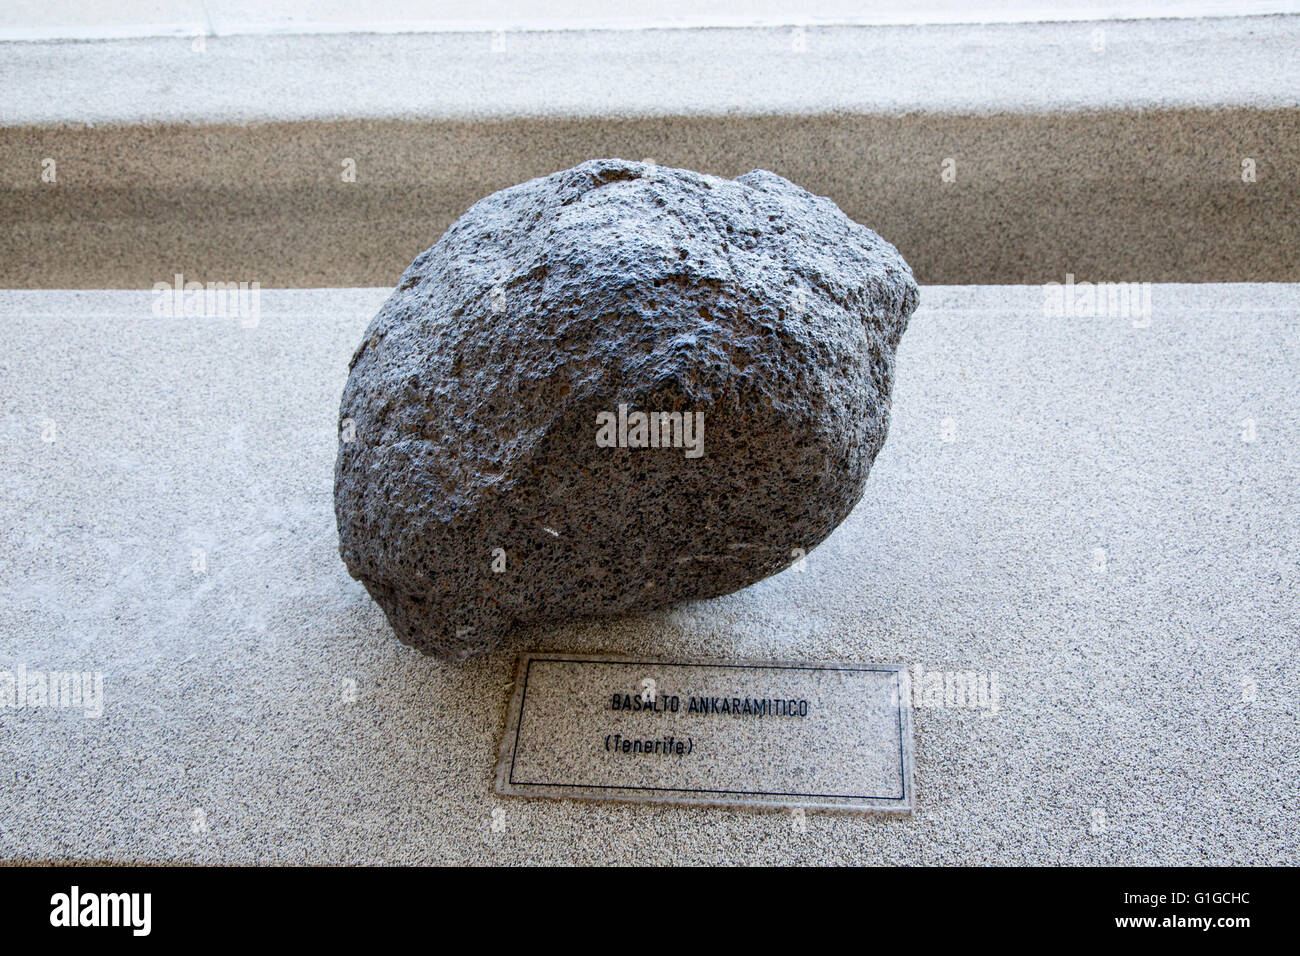 Ankaramite basalt rock sample geology display, Casa de los Volcanes volcanic study centre, Lanzarote, Canary island, Spain Stock Photo